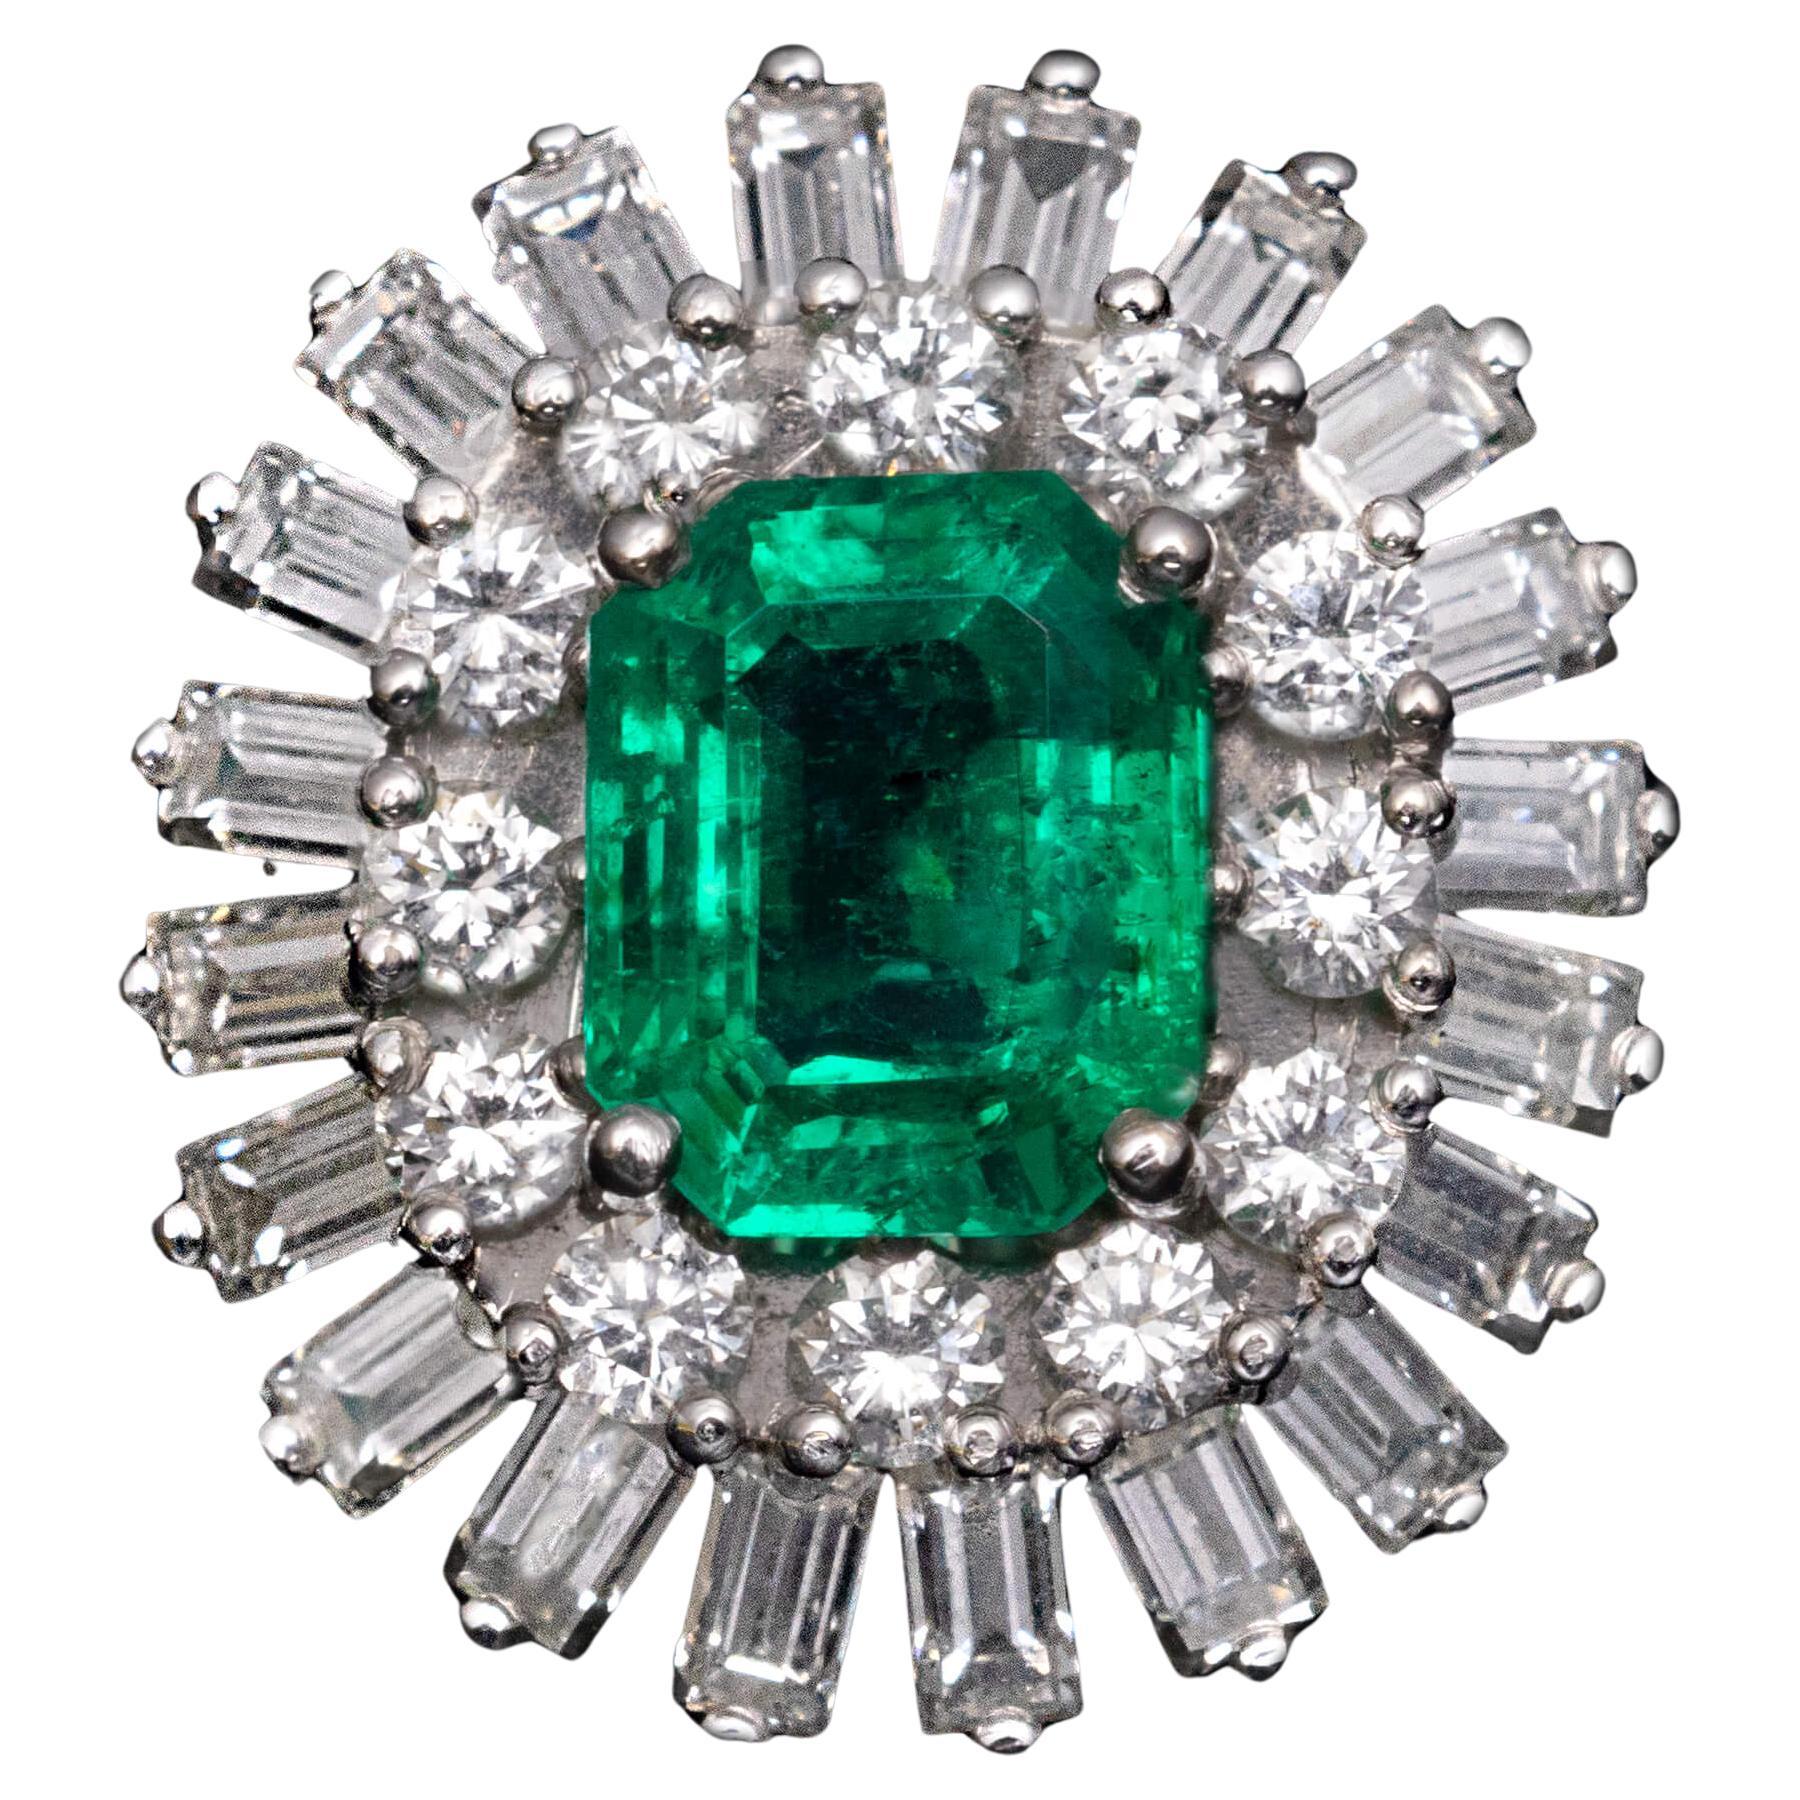 Emerald Diamond Double Halo Engagement Ring